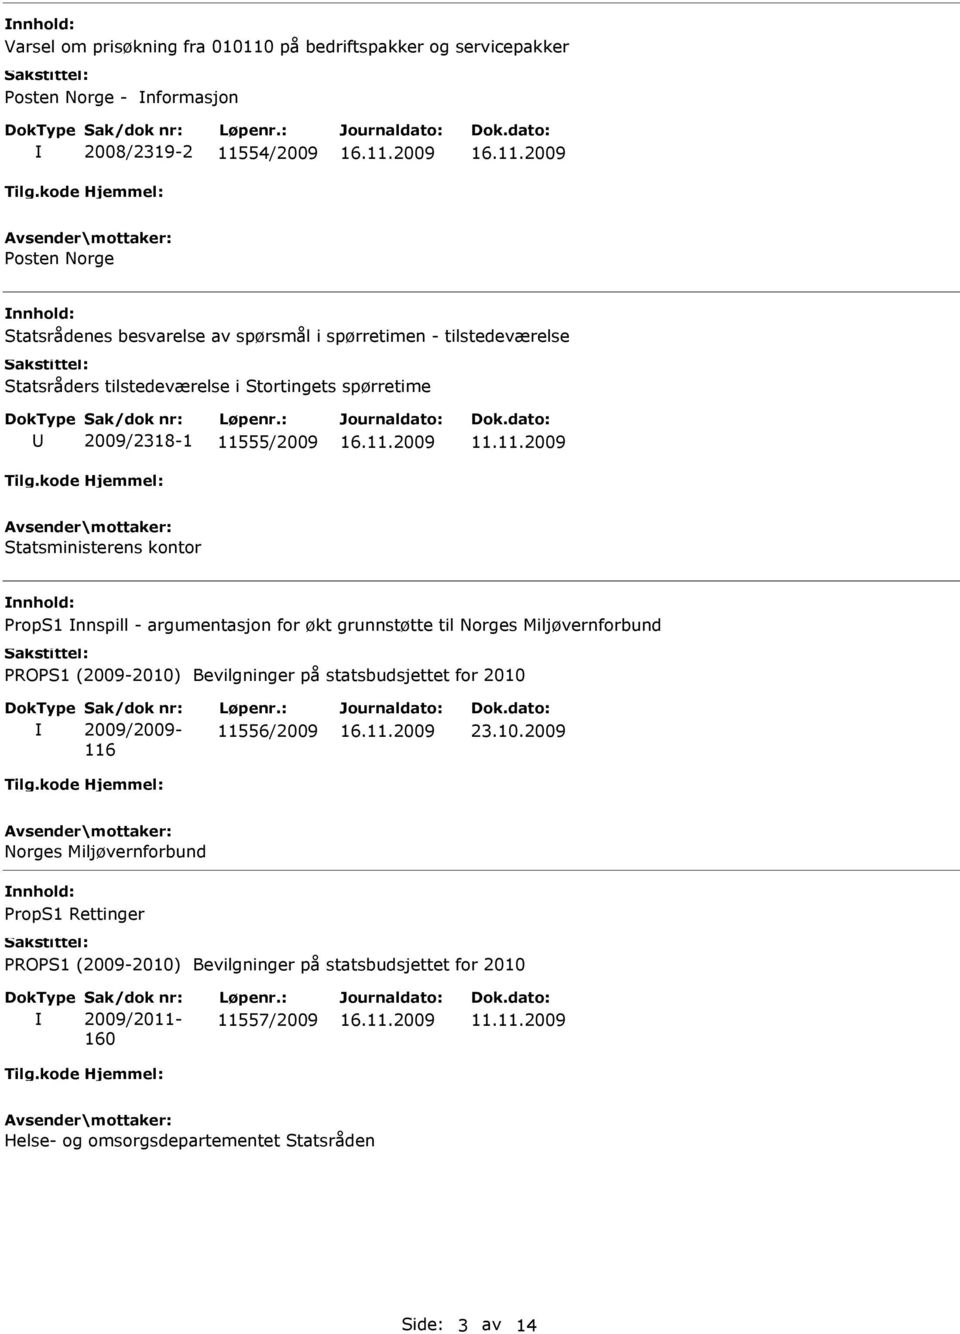 11555/2009 11.11.2009 Statsministerens kontor PropS1 nnspill - argumentasjon for økt grunnstøtte til Norges Miljøvernforbund 2009/2009-116 11556/2009 23.